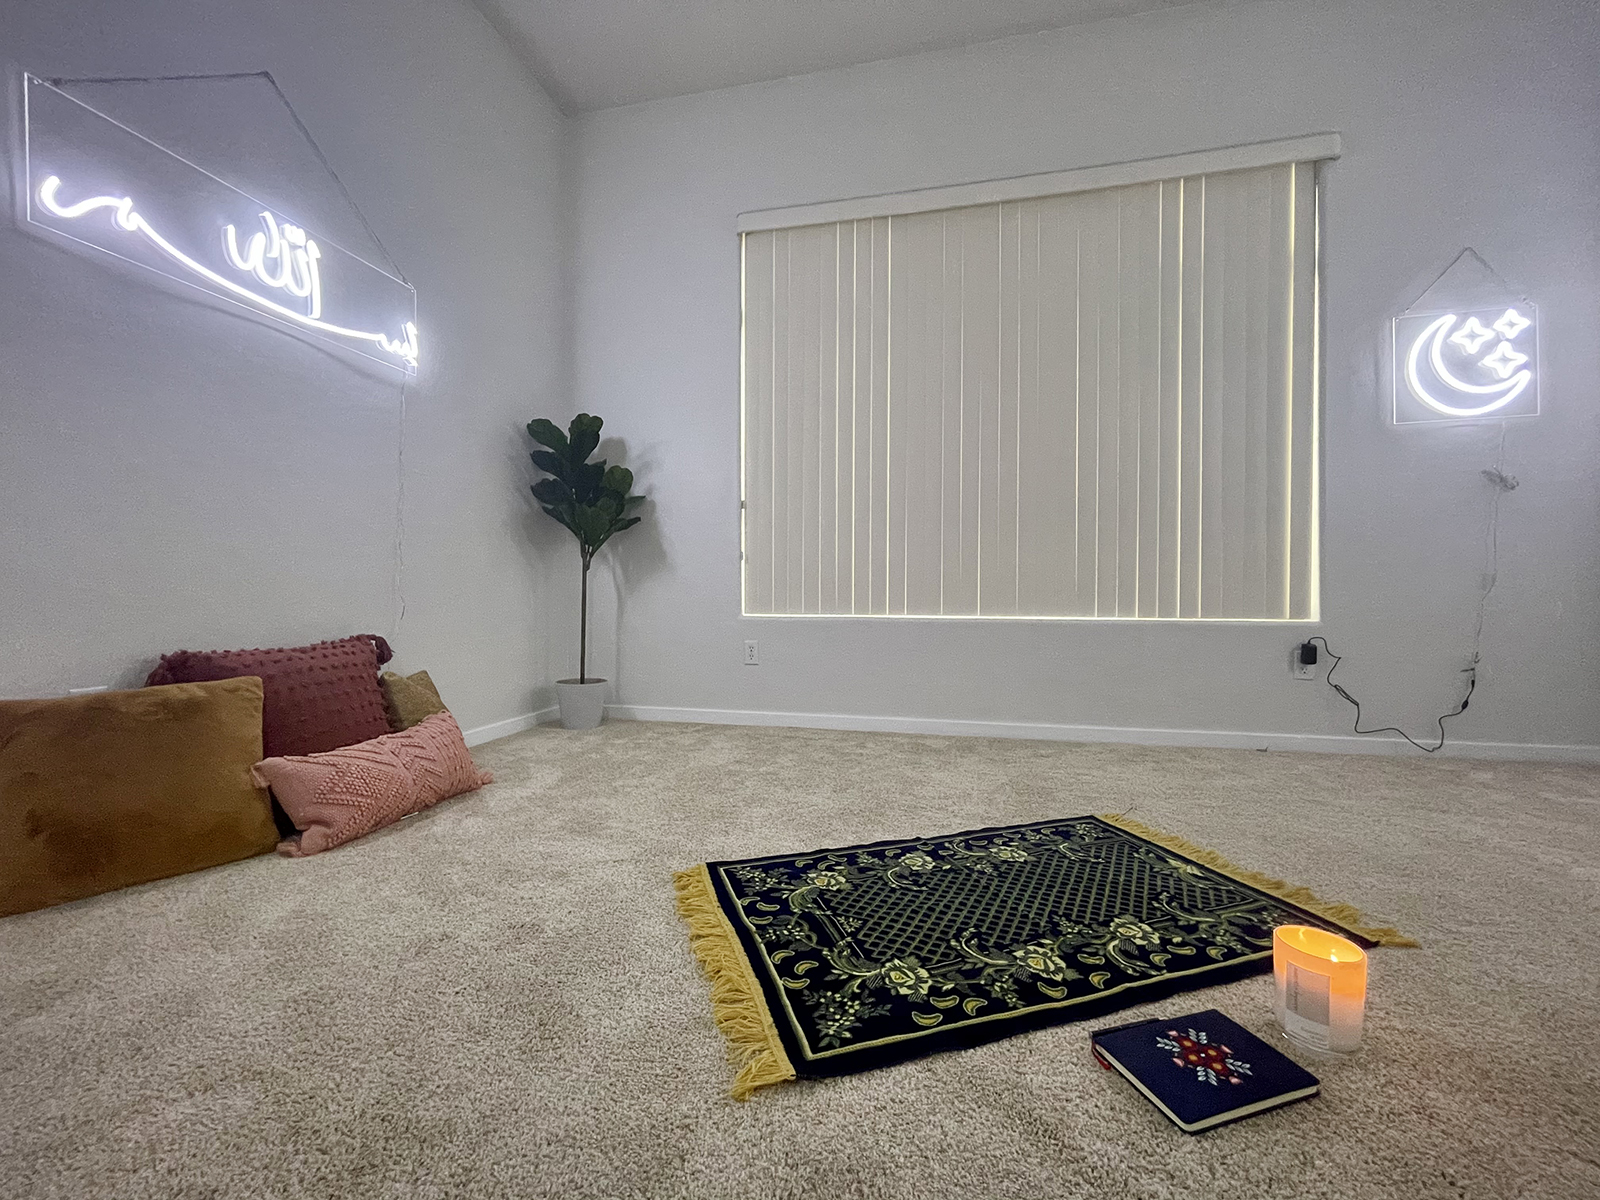 The Arizona home prayer room of Lena Sarsour includes a variety of neon lights. Photo courtesy Lena Sarsour